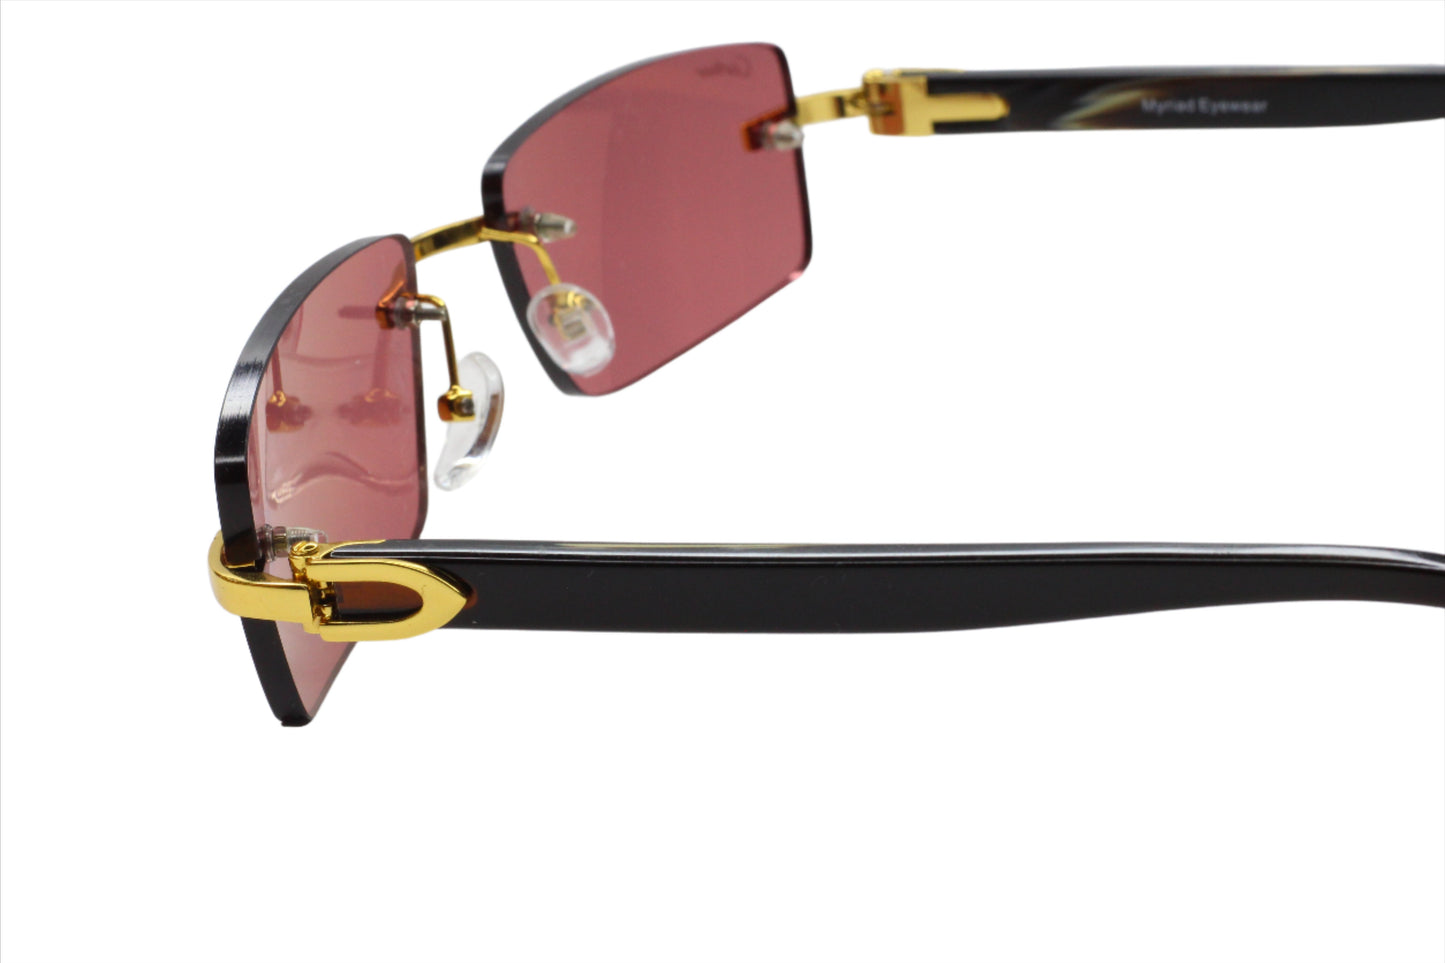 Myriad Eyewear ME00516 Gold & Black Swirl Design Luxury Sunglasses